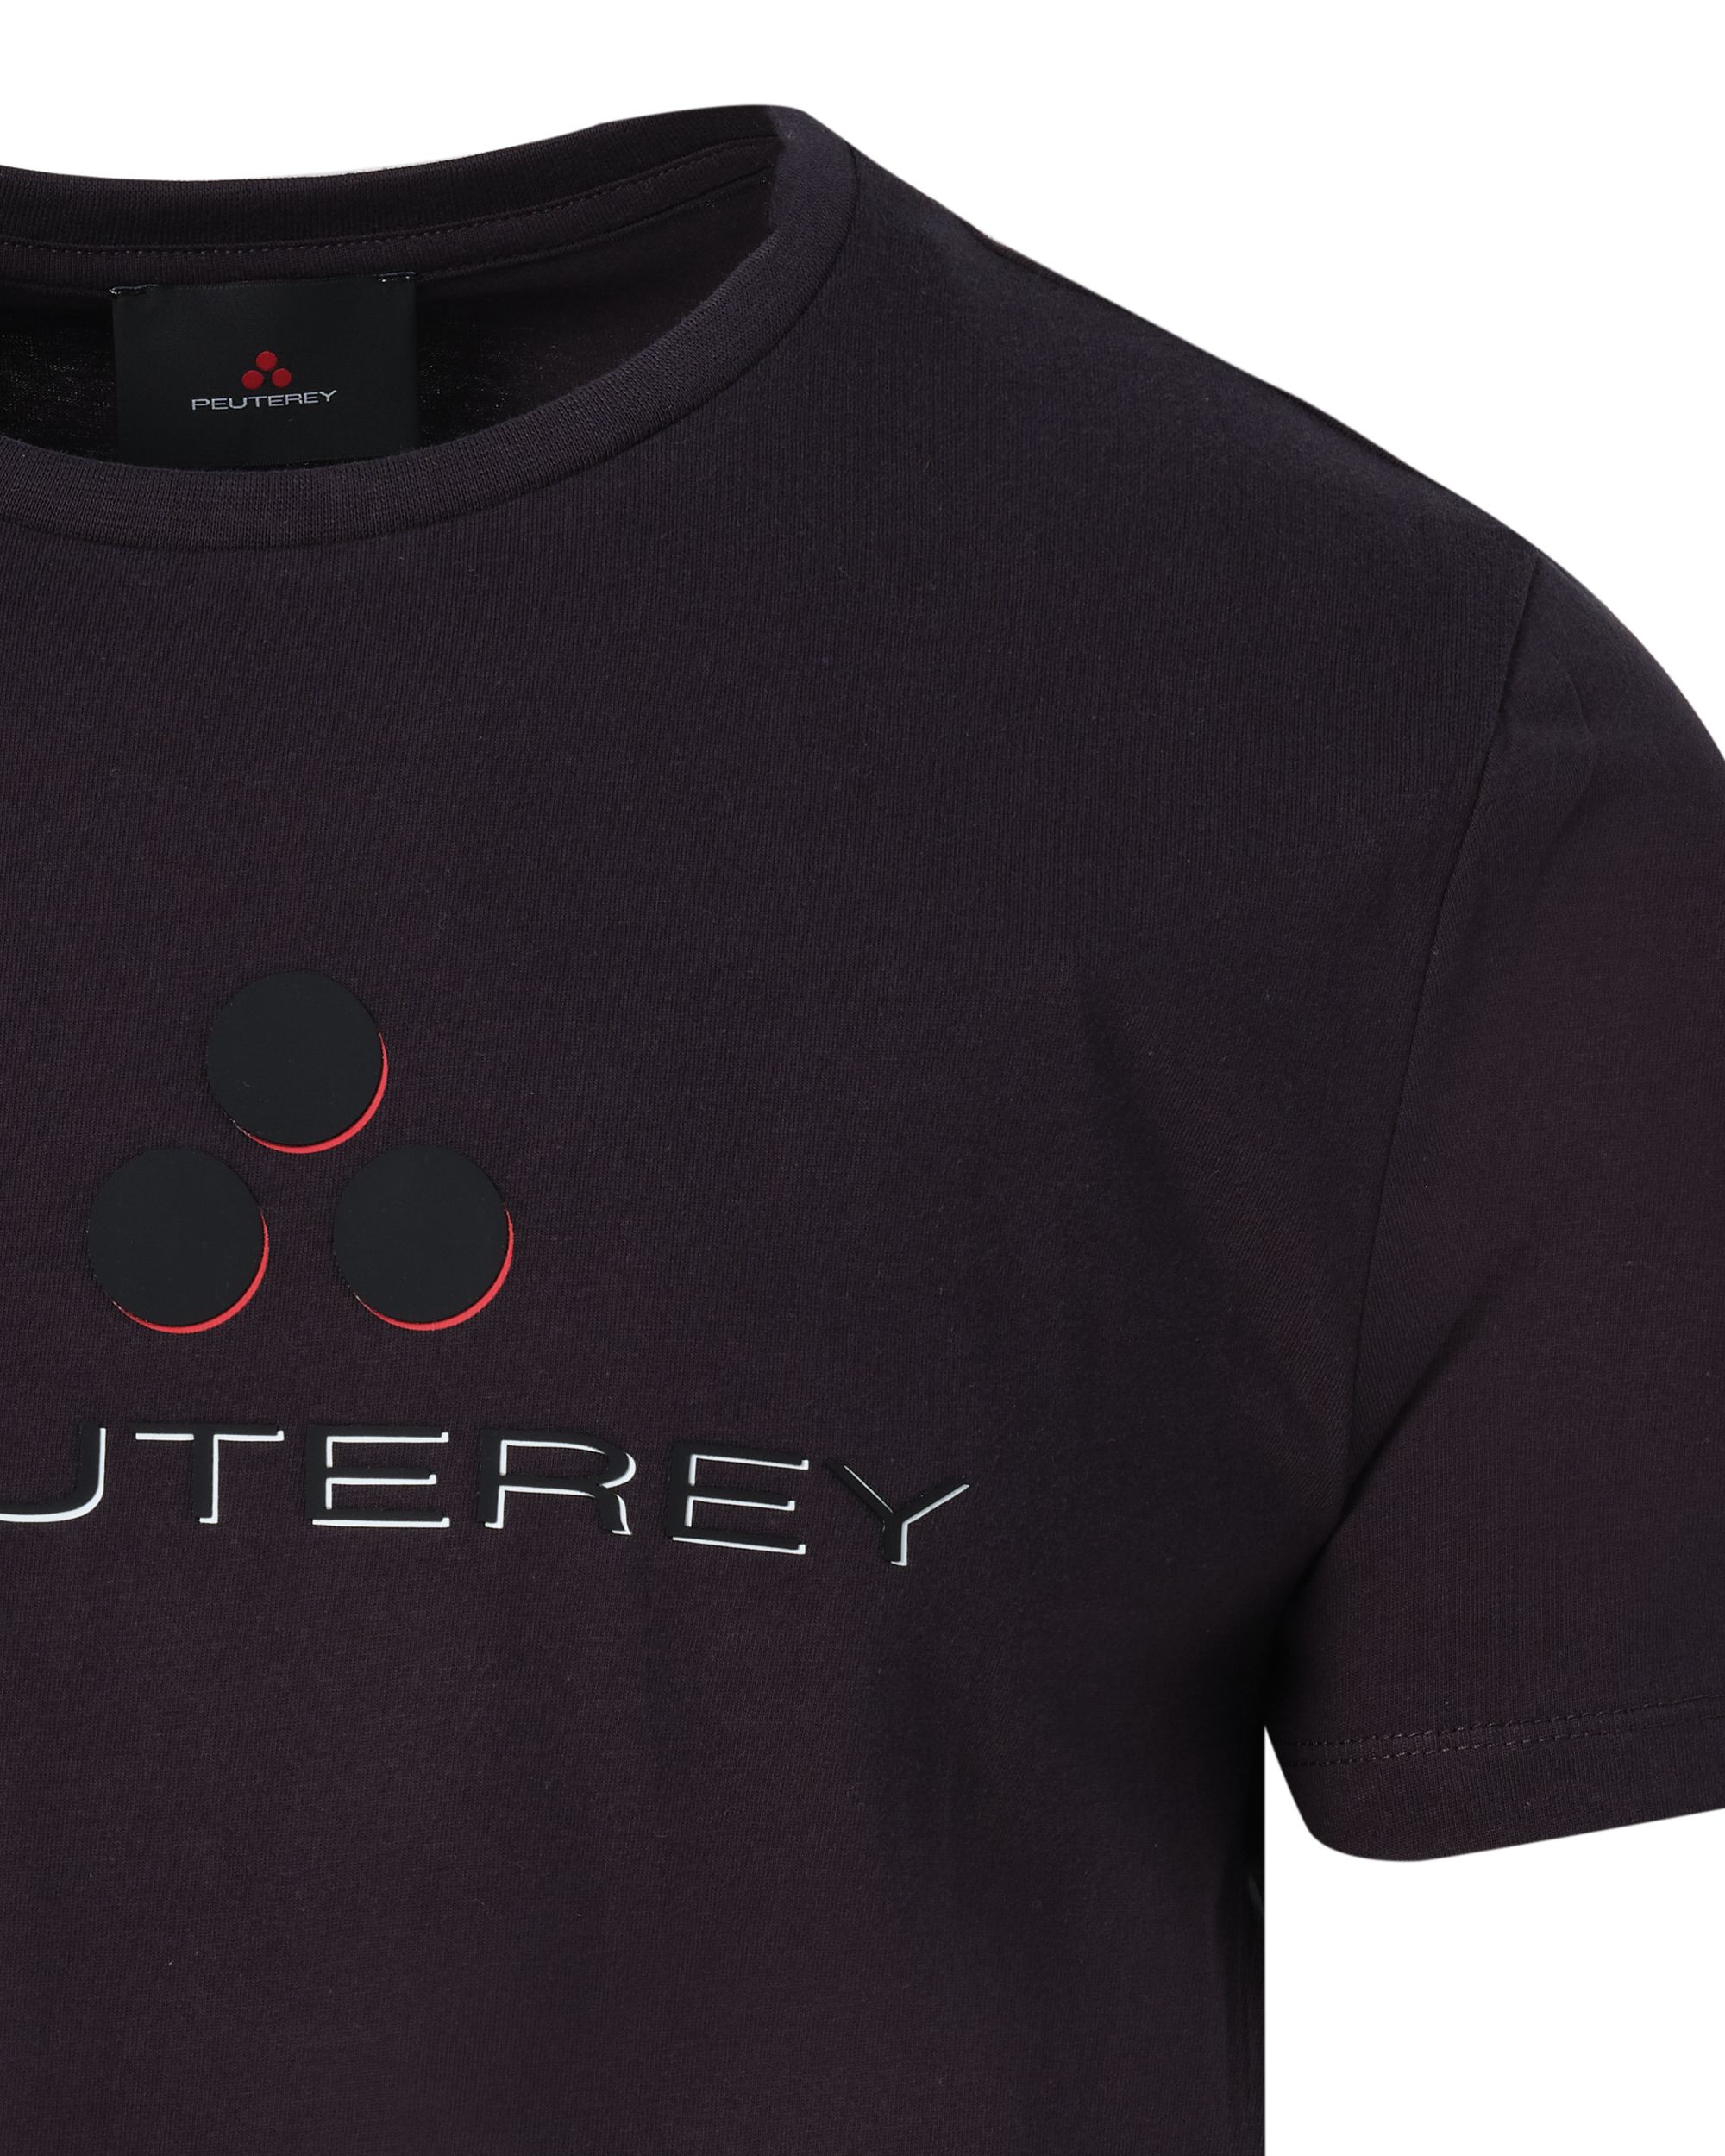 Peuterey T-shirt KM Donker blauw 083991-001-L